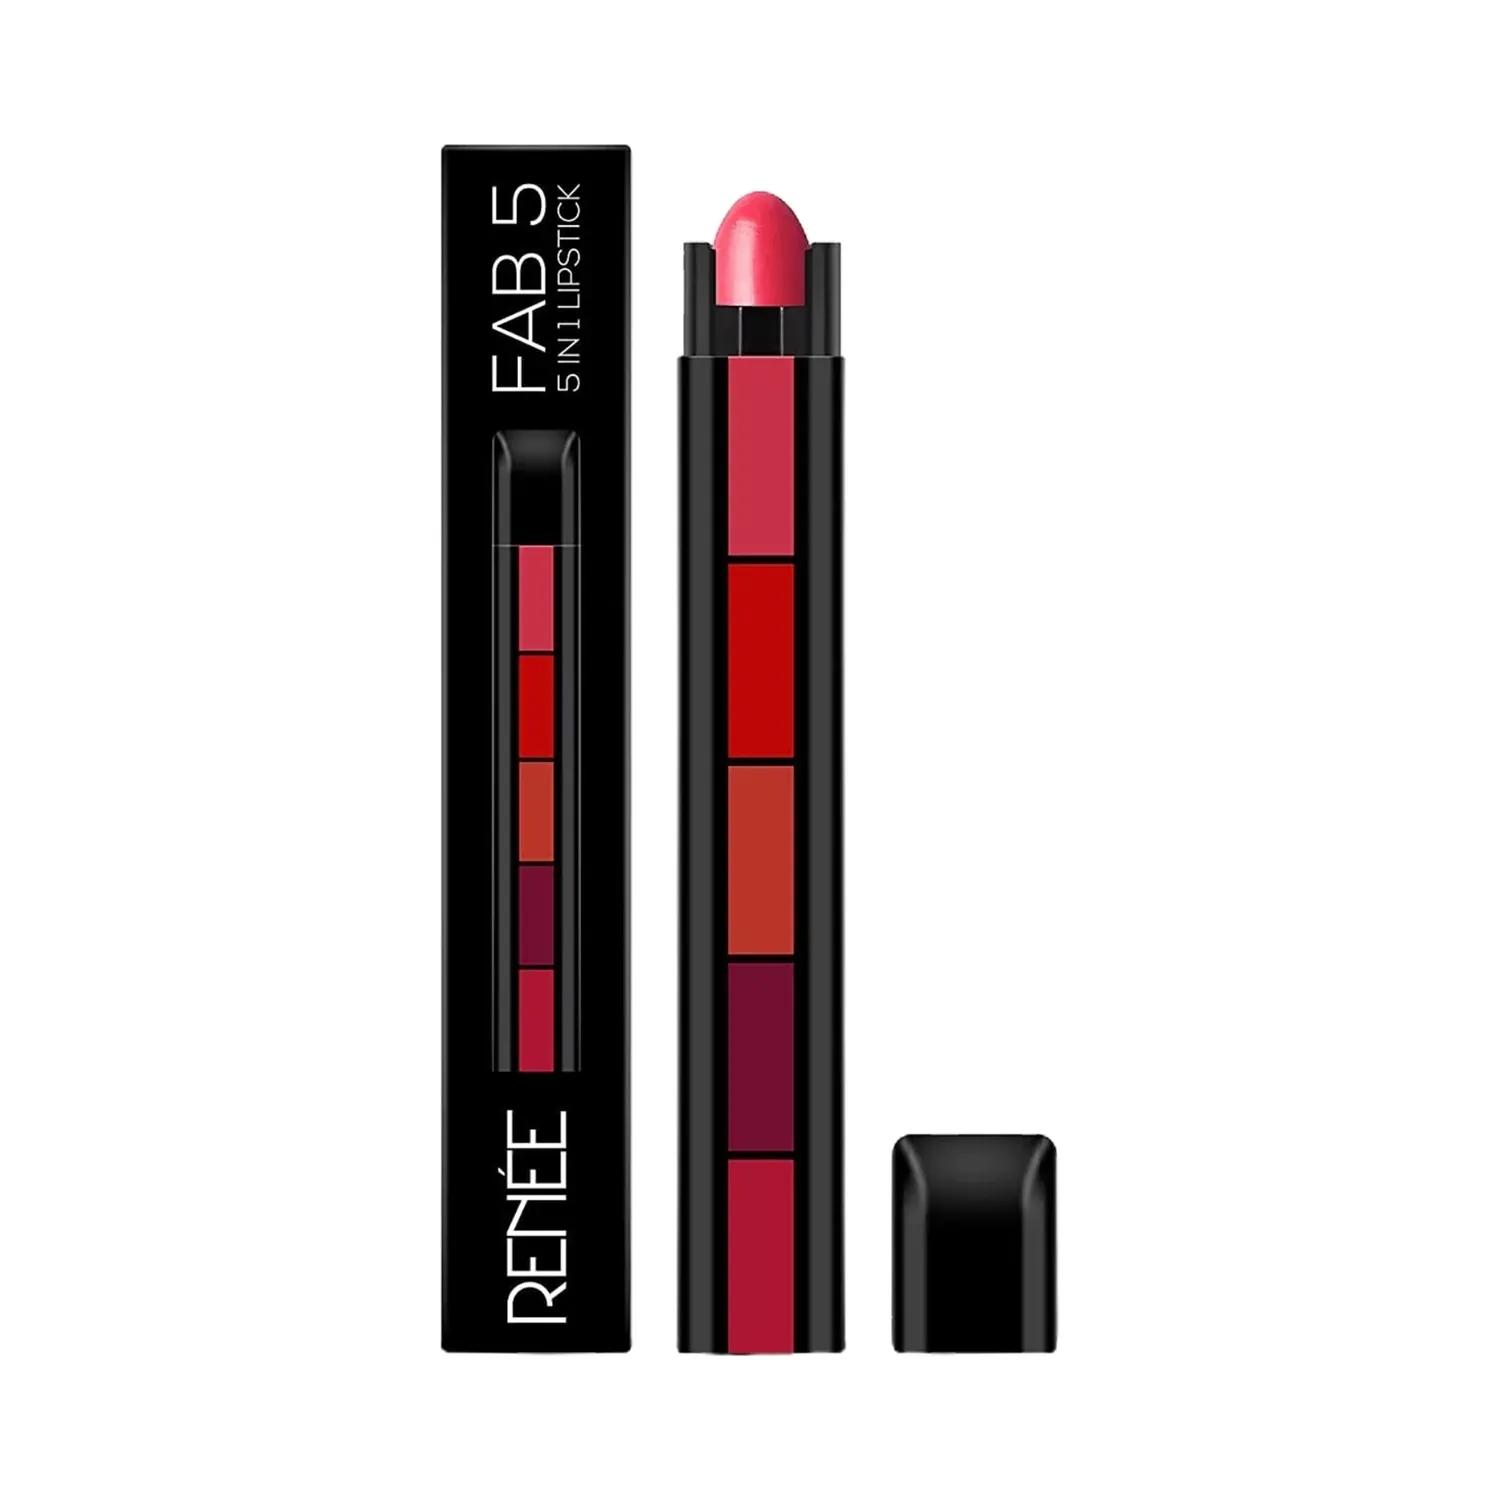 renee fab 5 5-in-1 lipstick (7.5g)